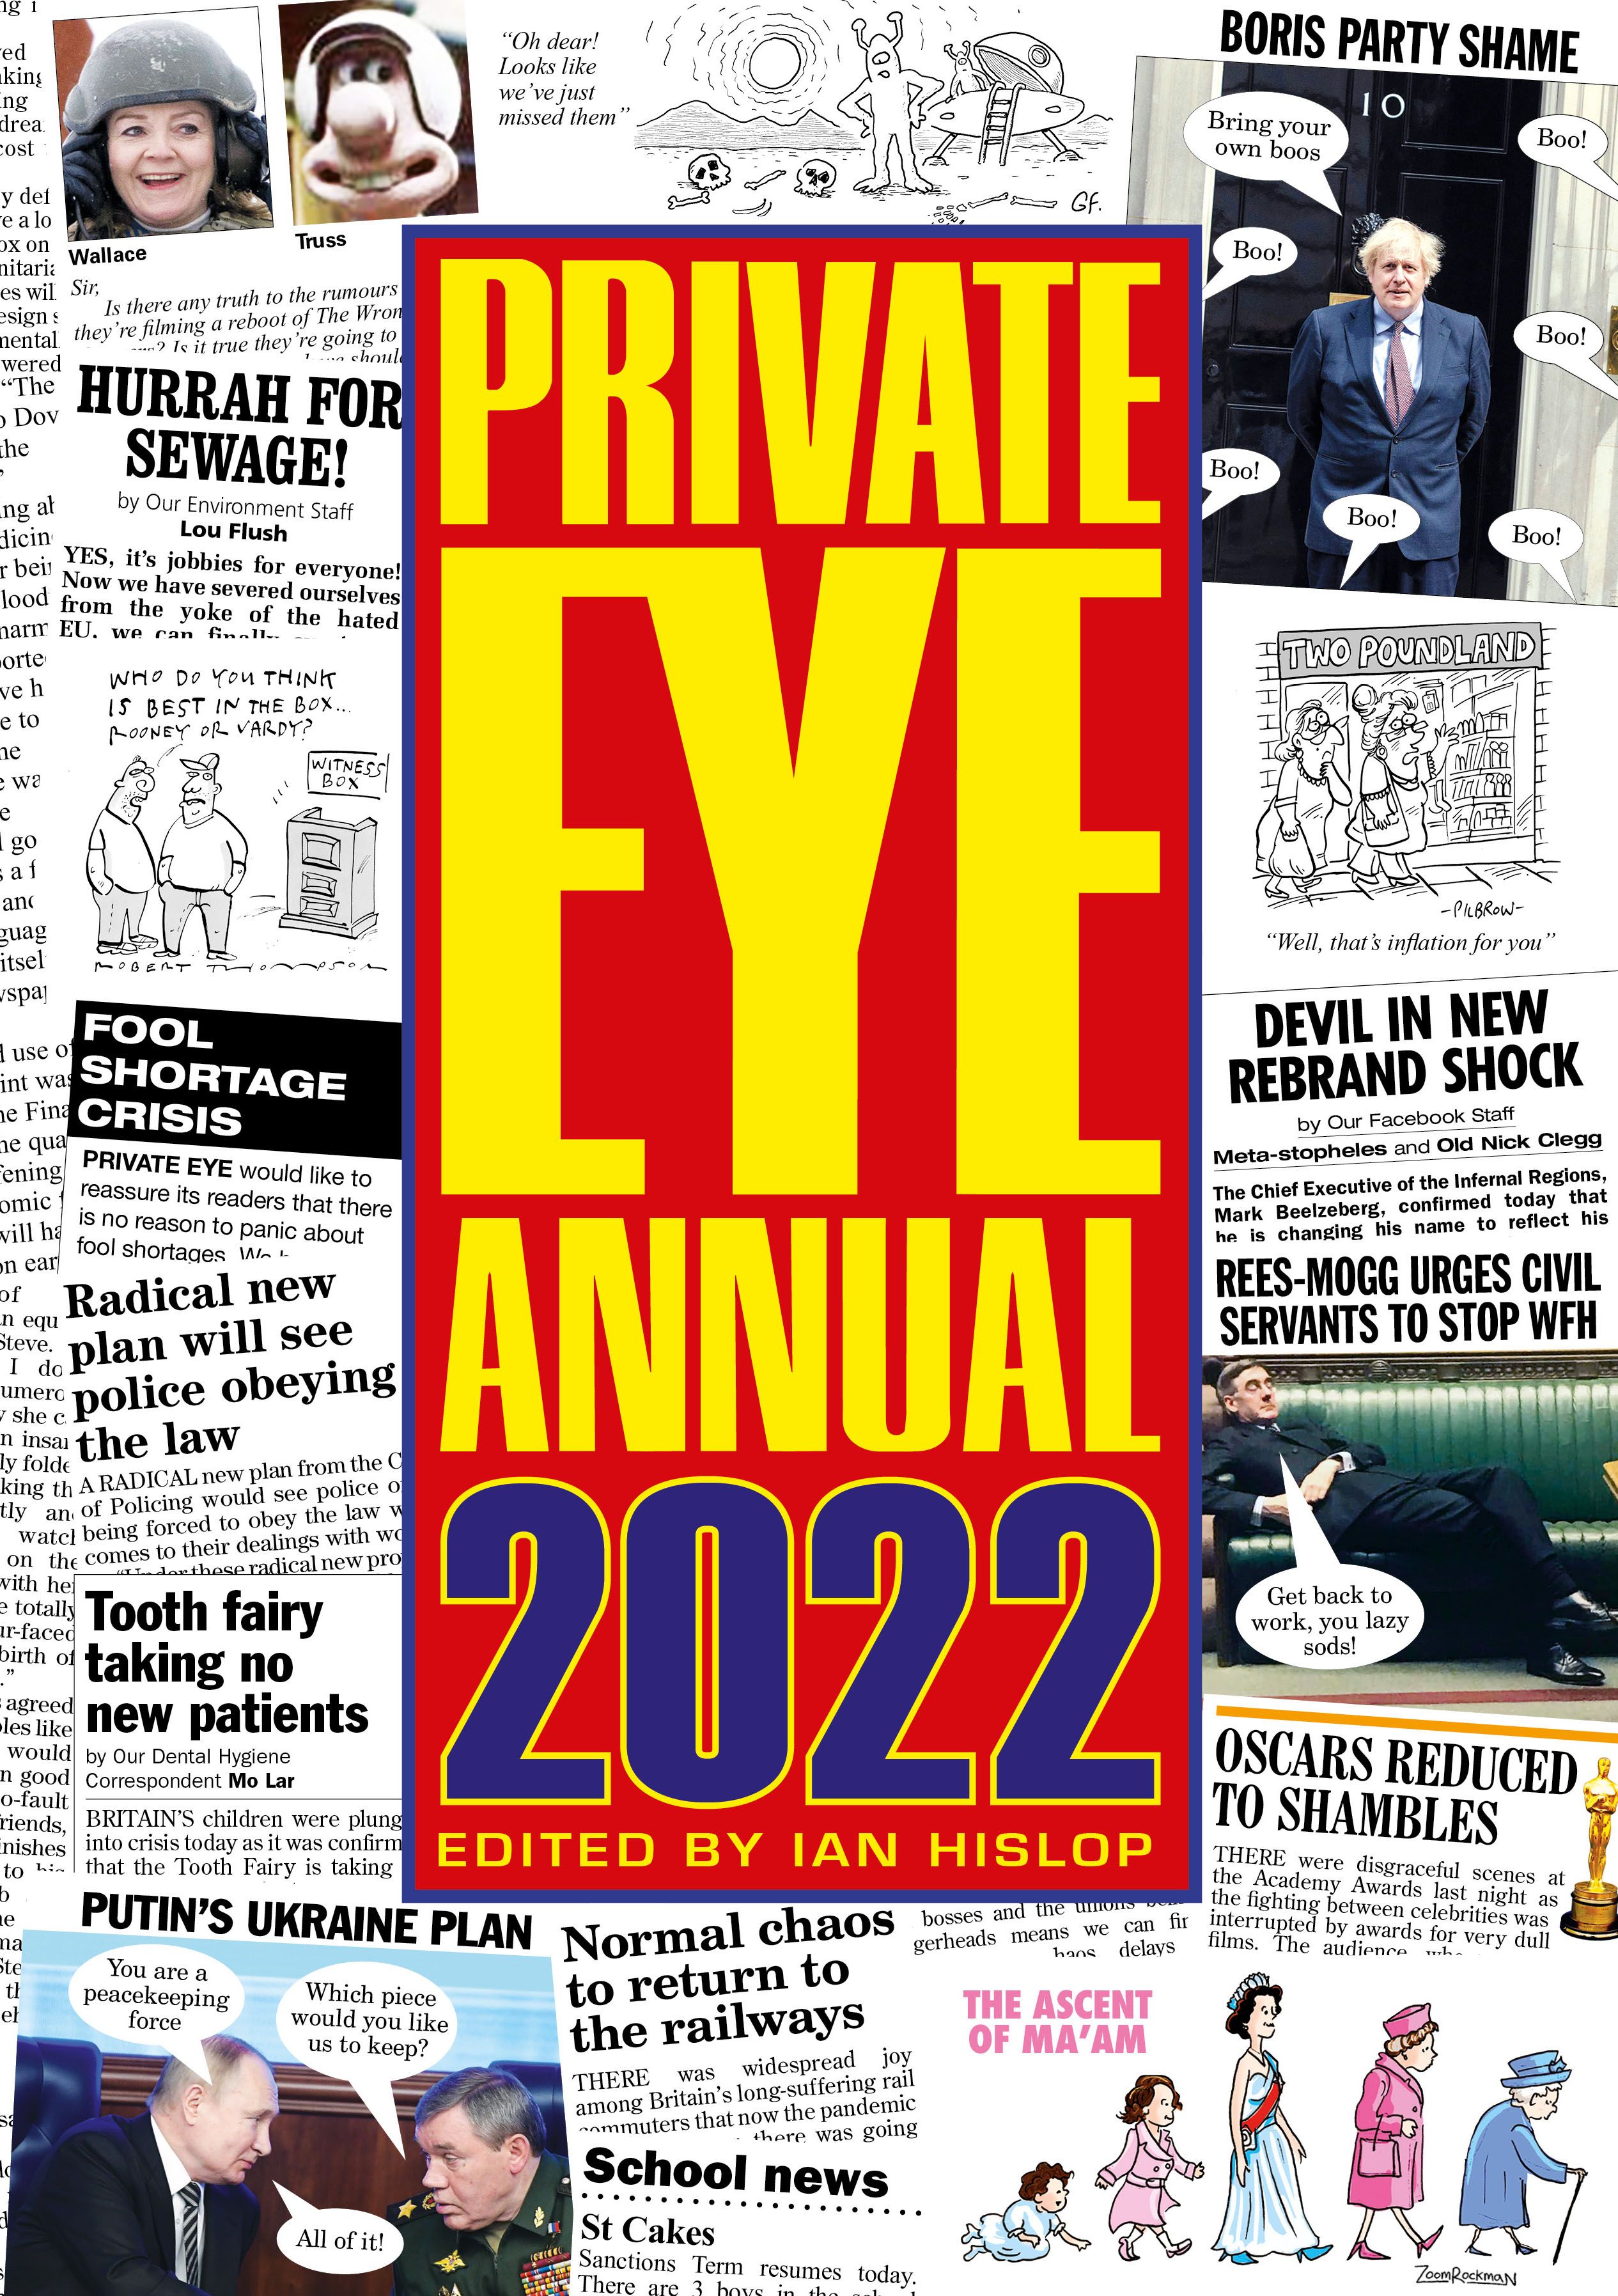 Private Eye Annual 2022 cover (Private Eye/PA)